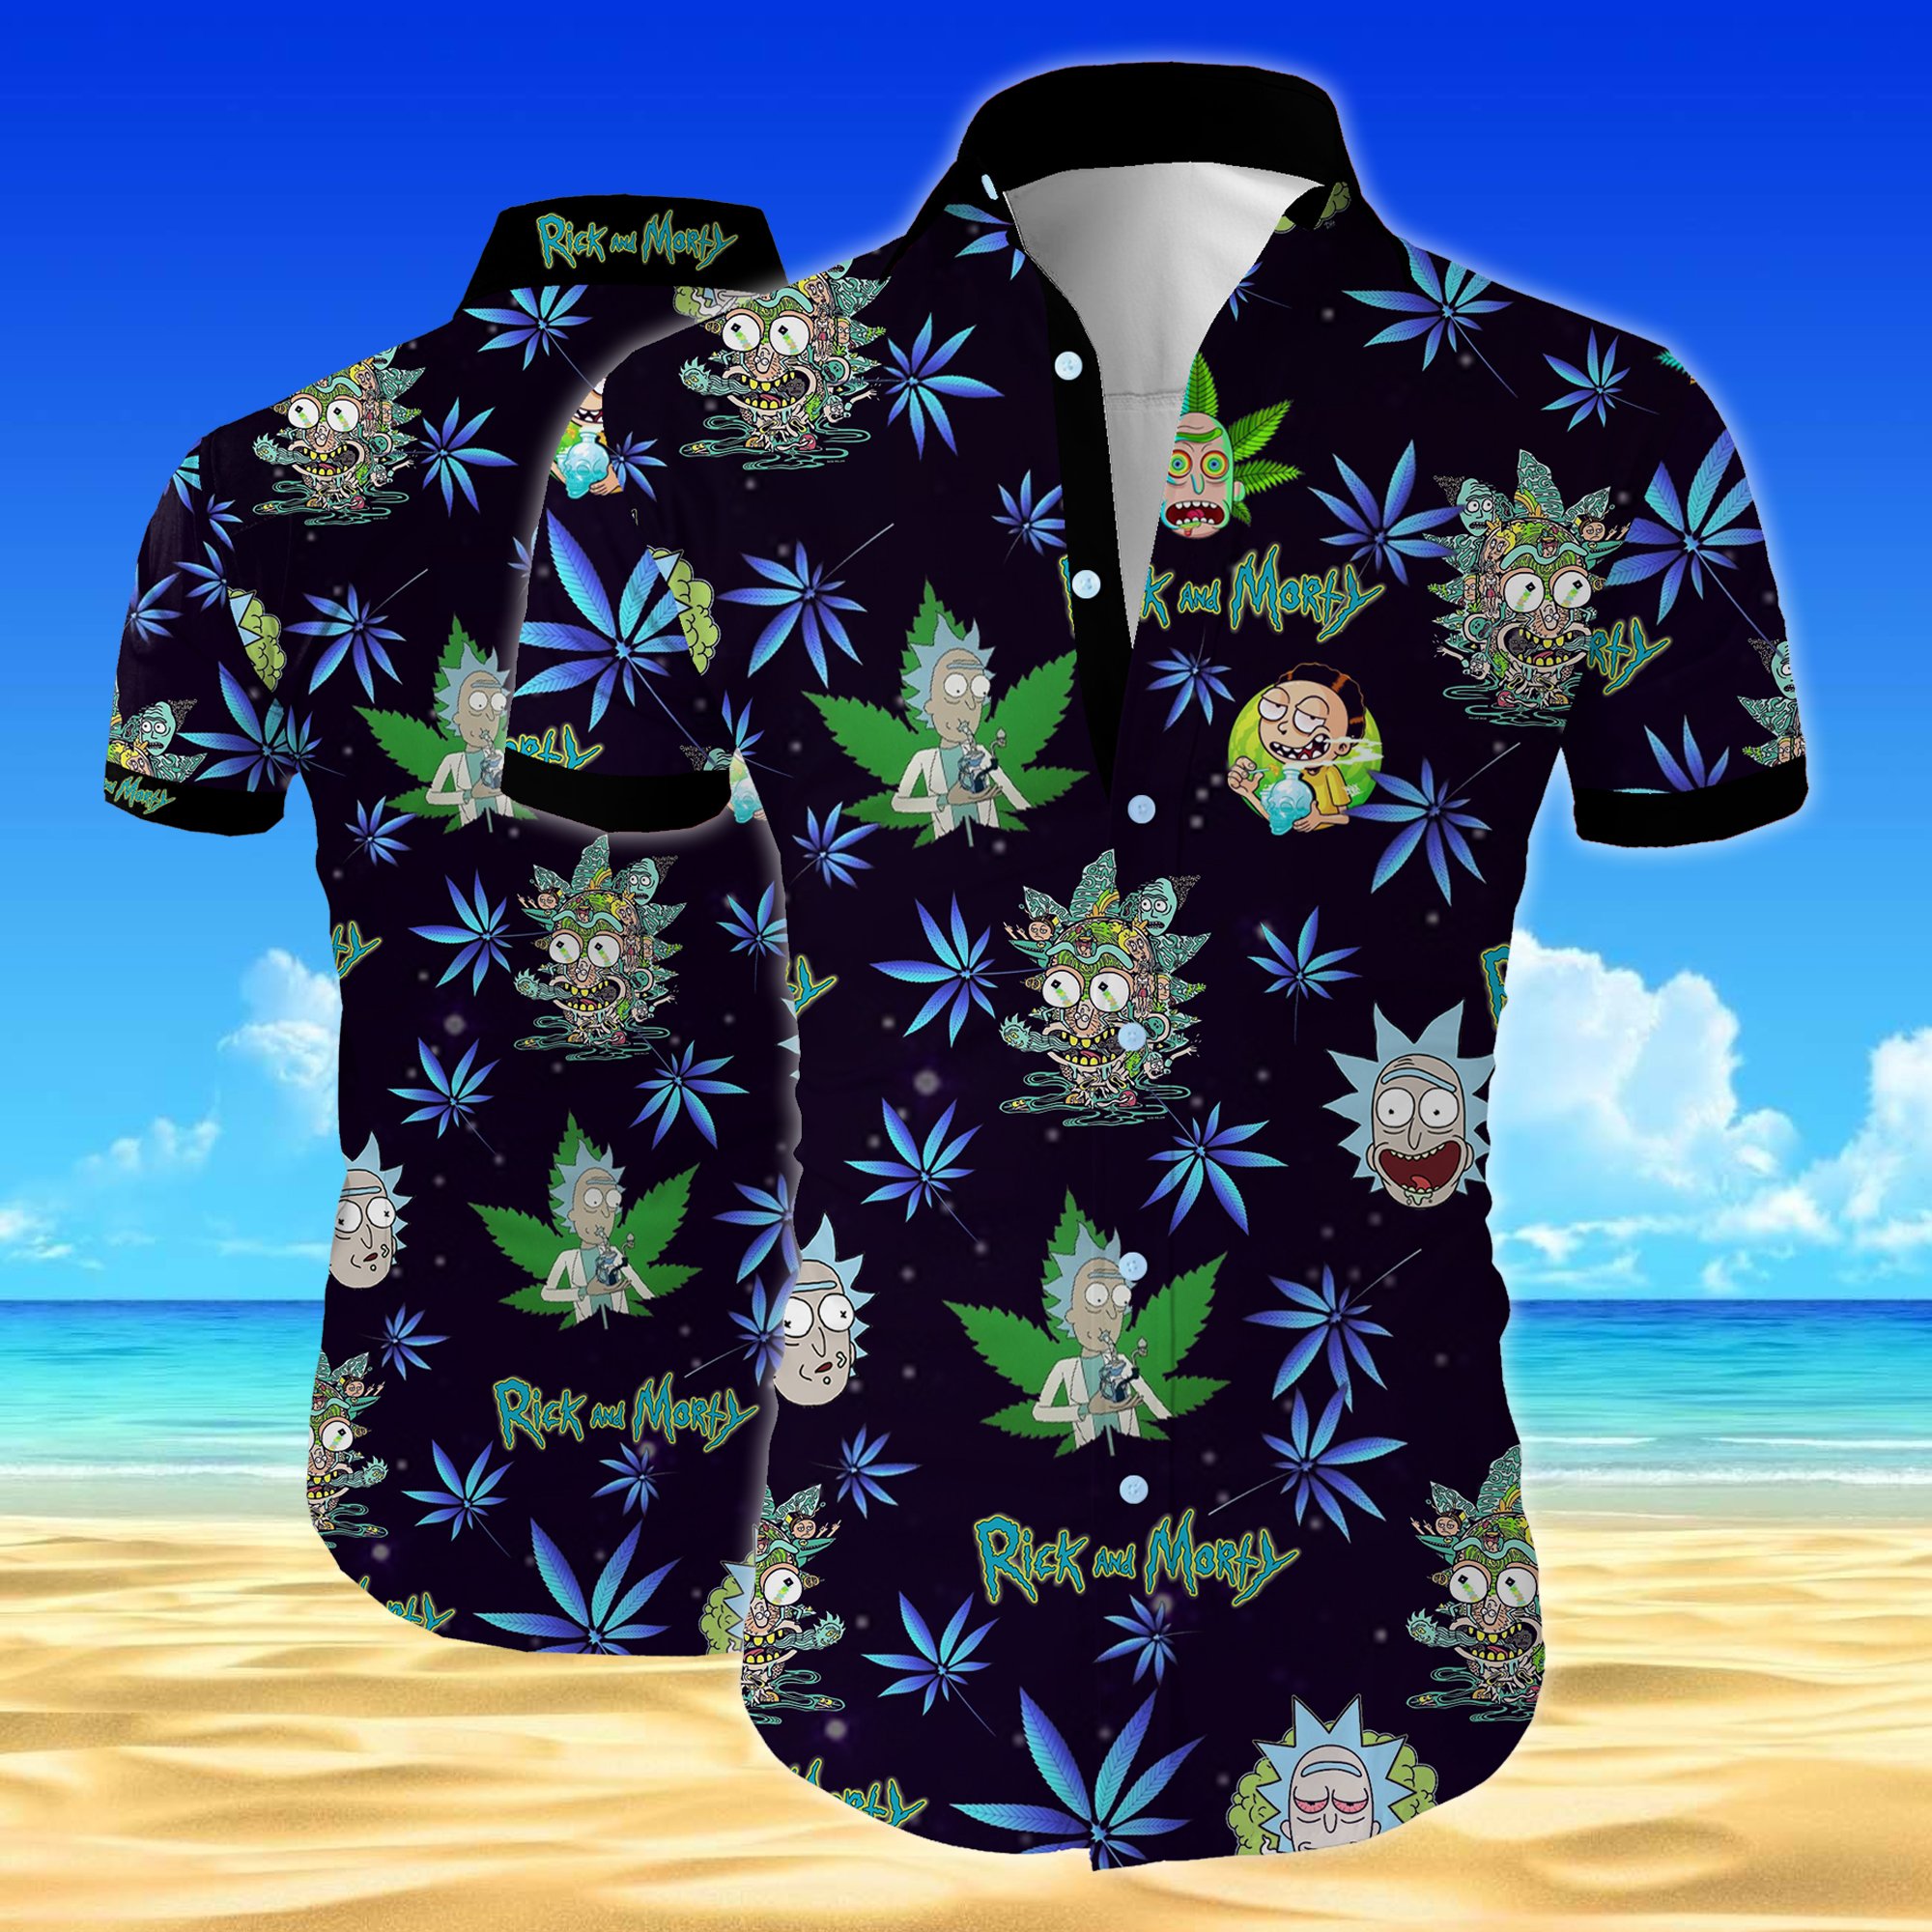 Rick and morty all over printed hawaiian shirt